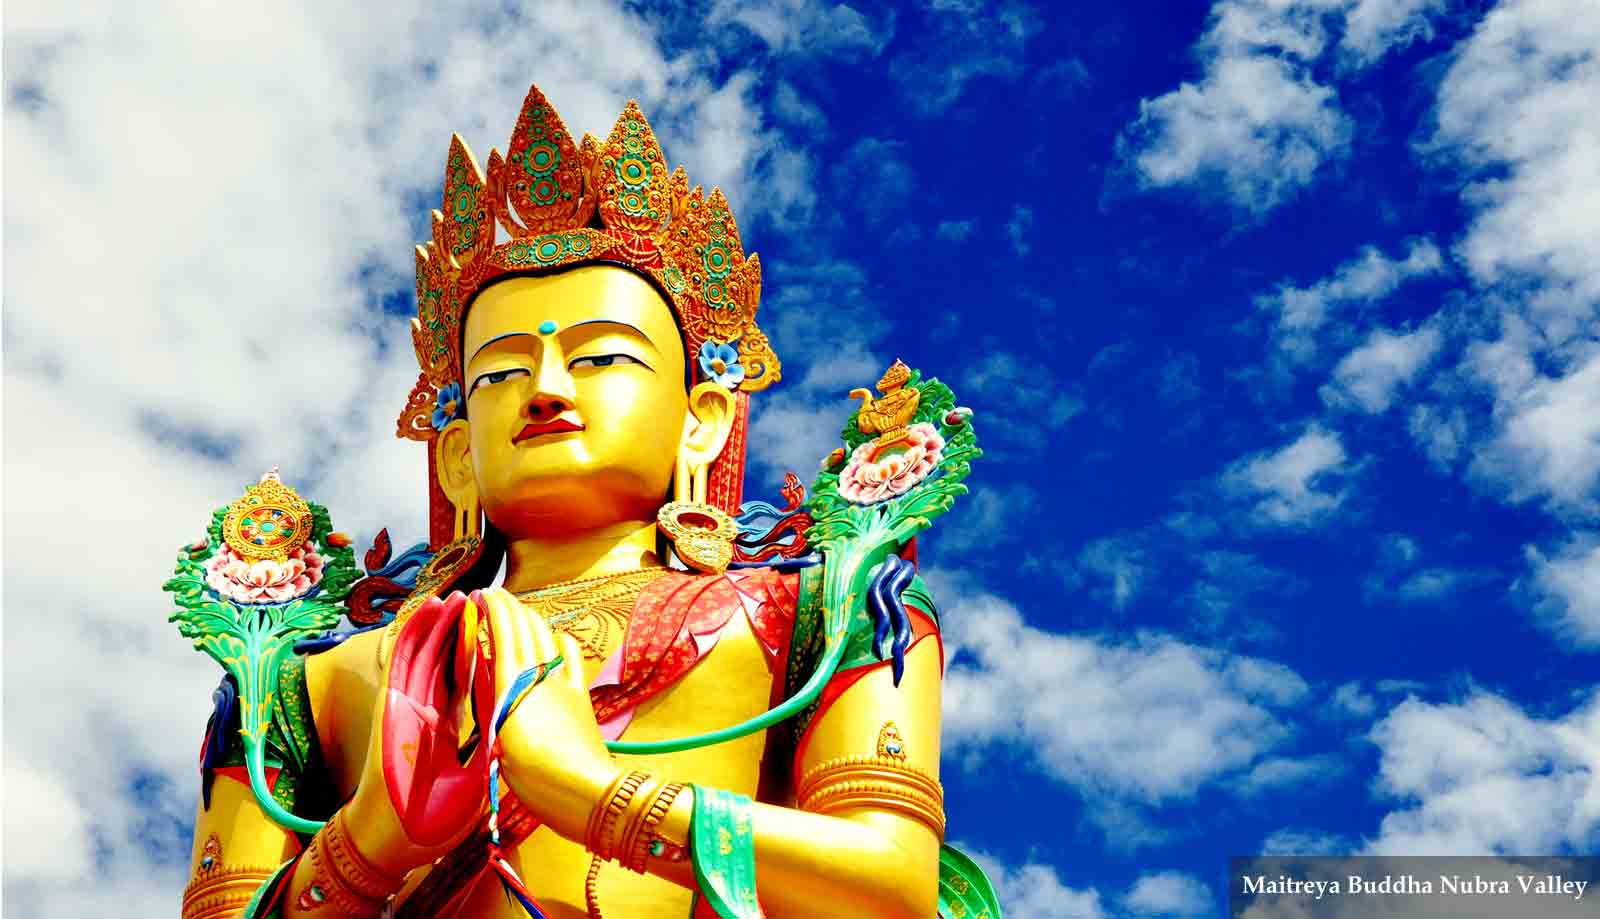 Maitreya Buddha Nubra